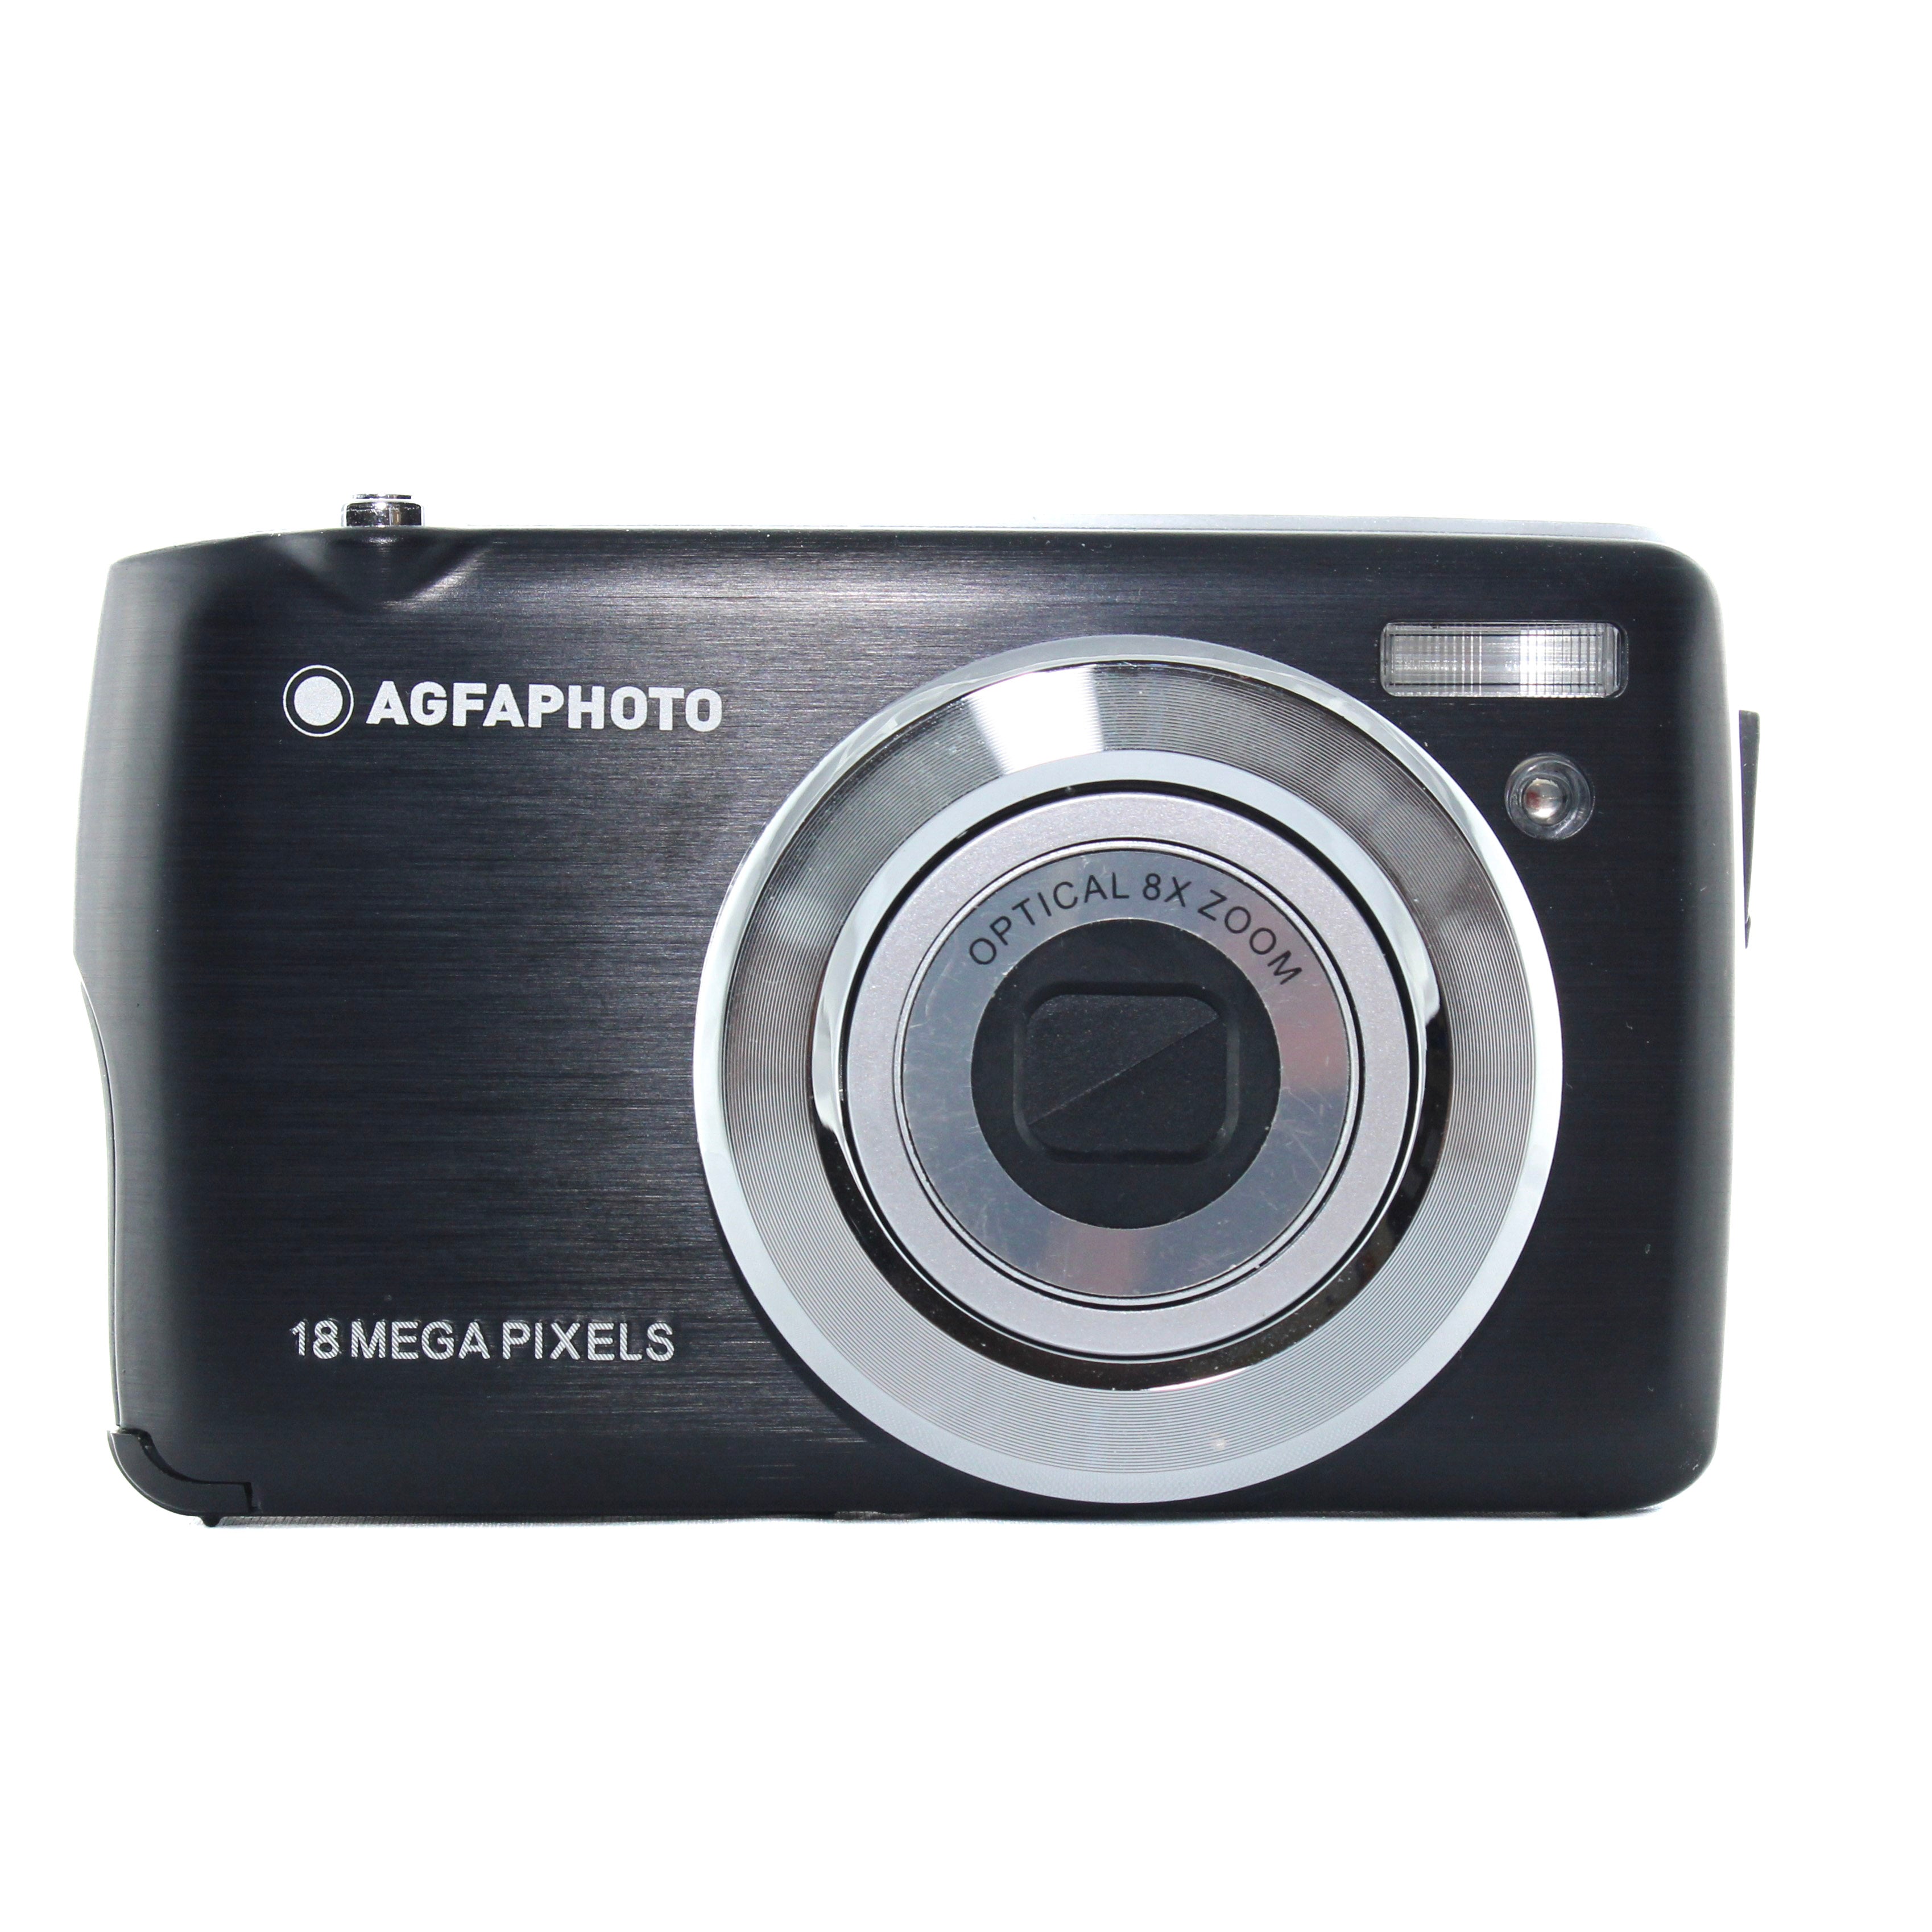 Agfa Realishot DC8200 Digital Compact Camera Kit